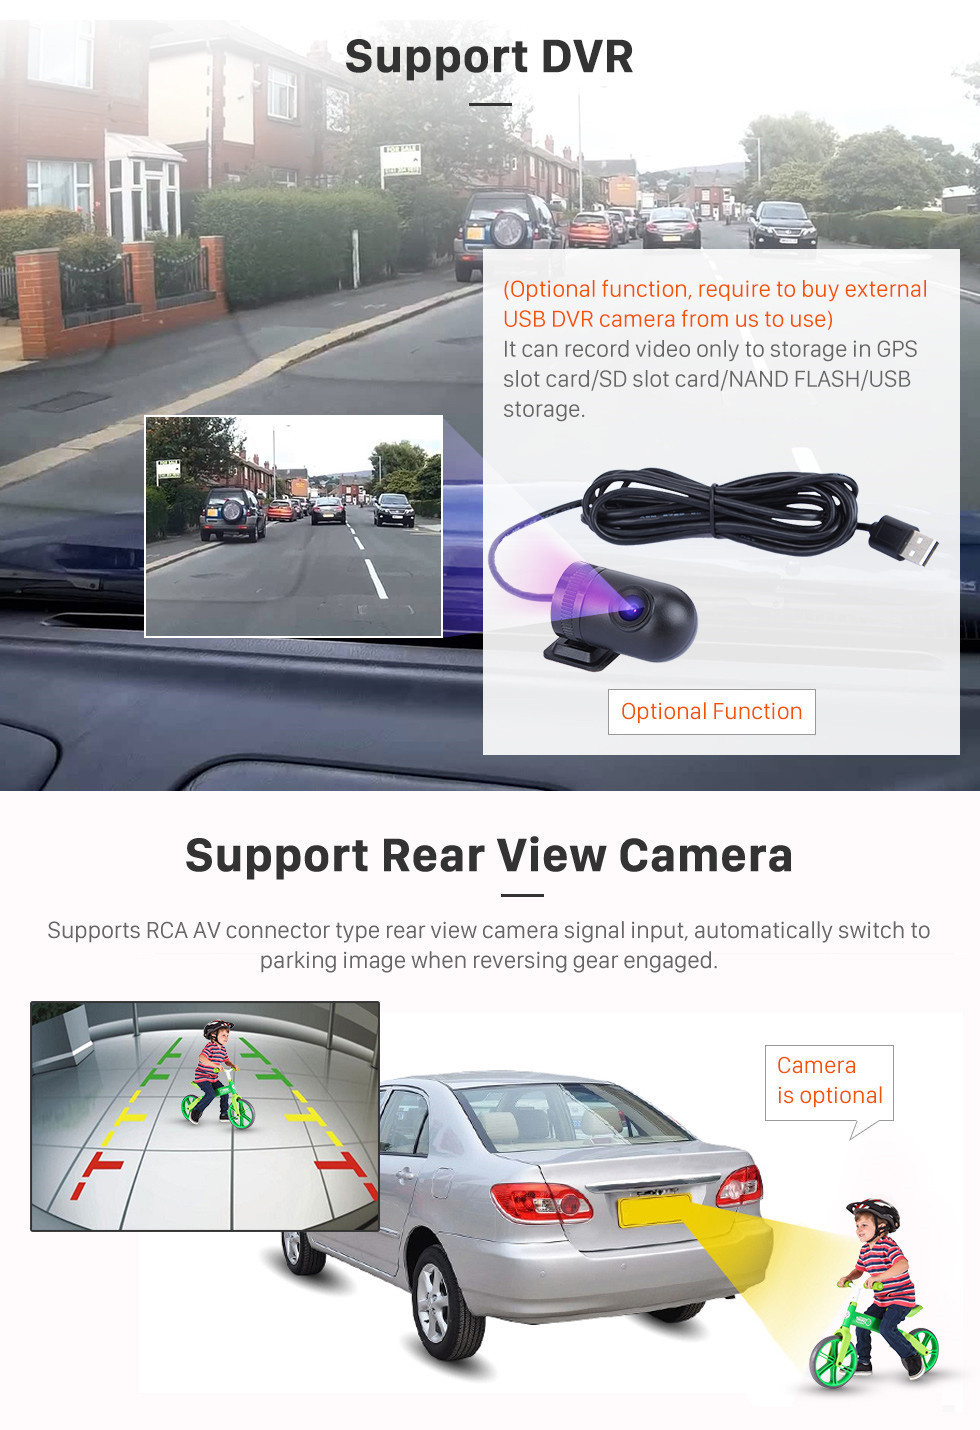 Seicane 2000-2003 Toyota Camry Android 11.0 Radio de navigation GPS 9 pouces Bluetooth HD avec écran tactile WIFI Support USB Carplay Caméra de recul